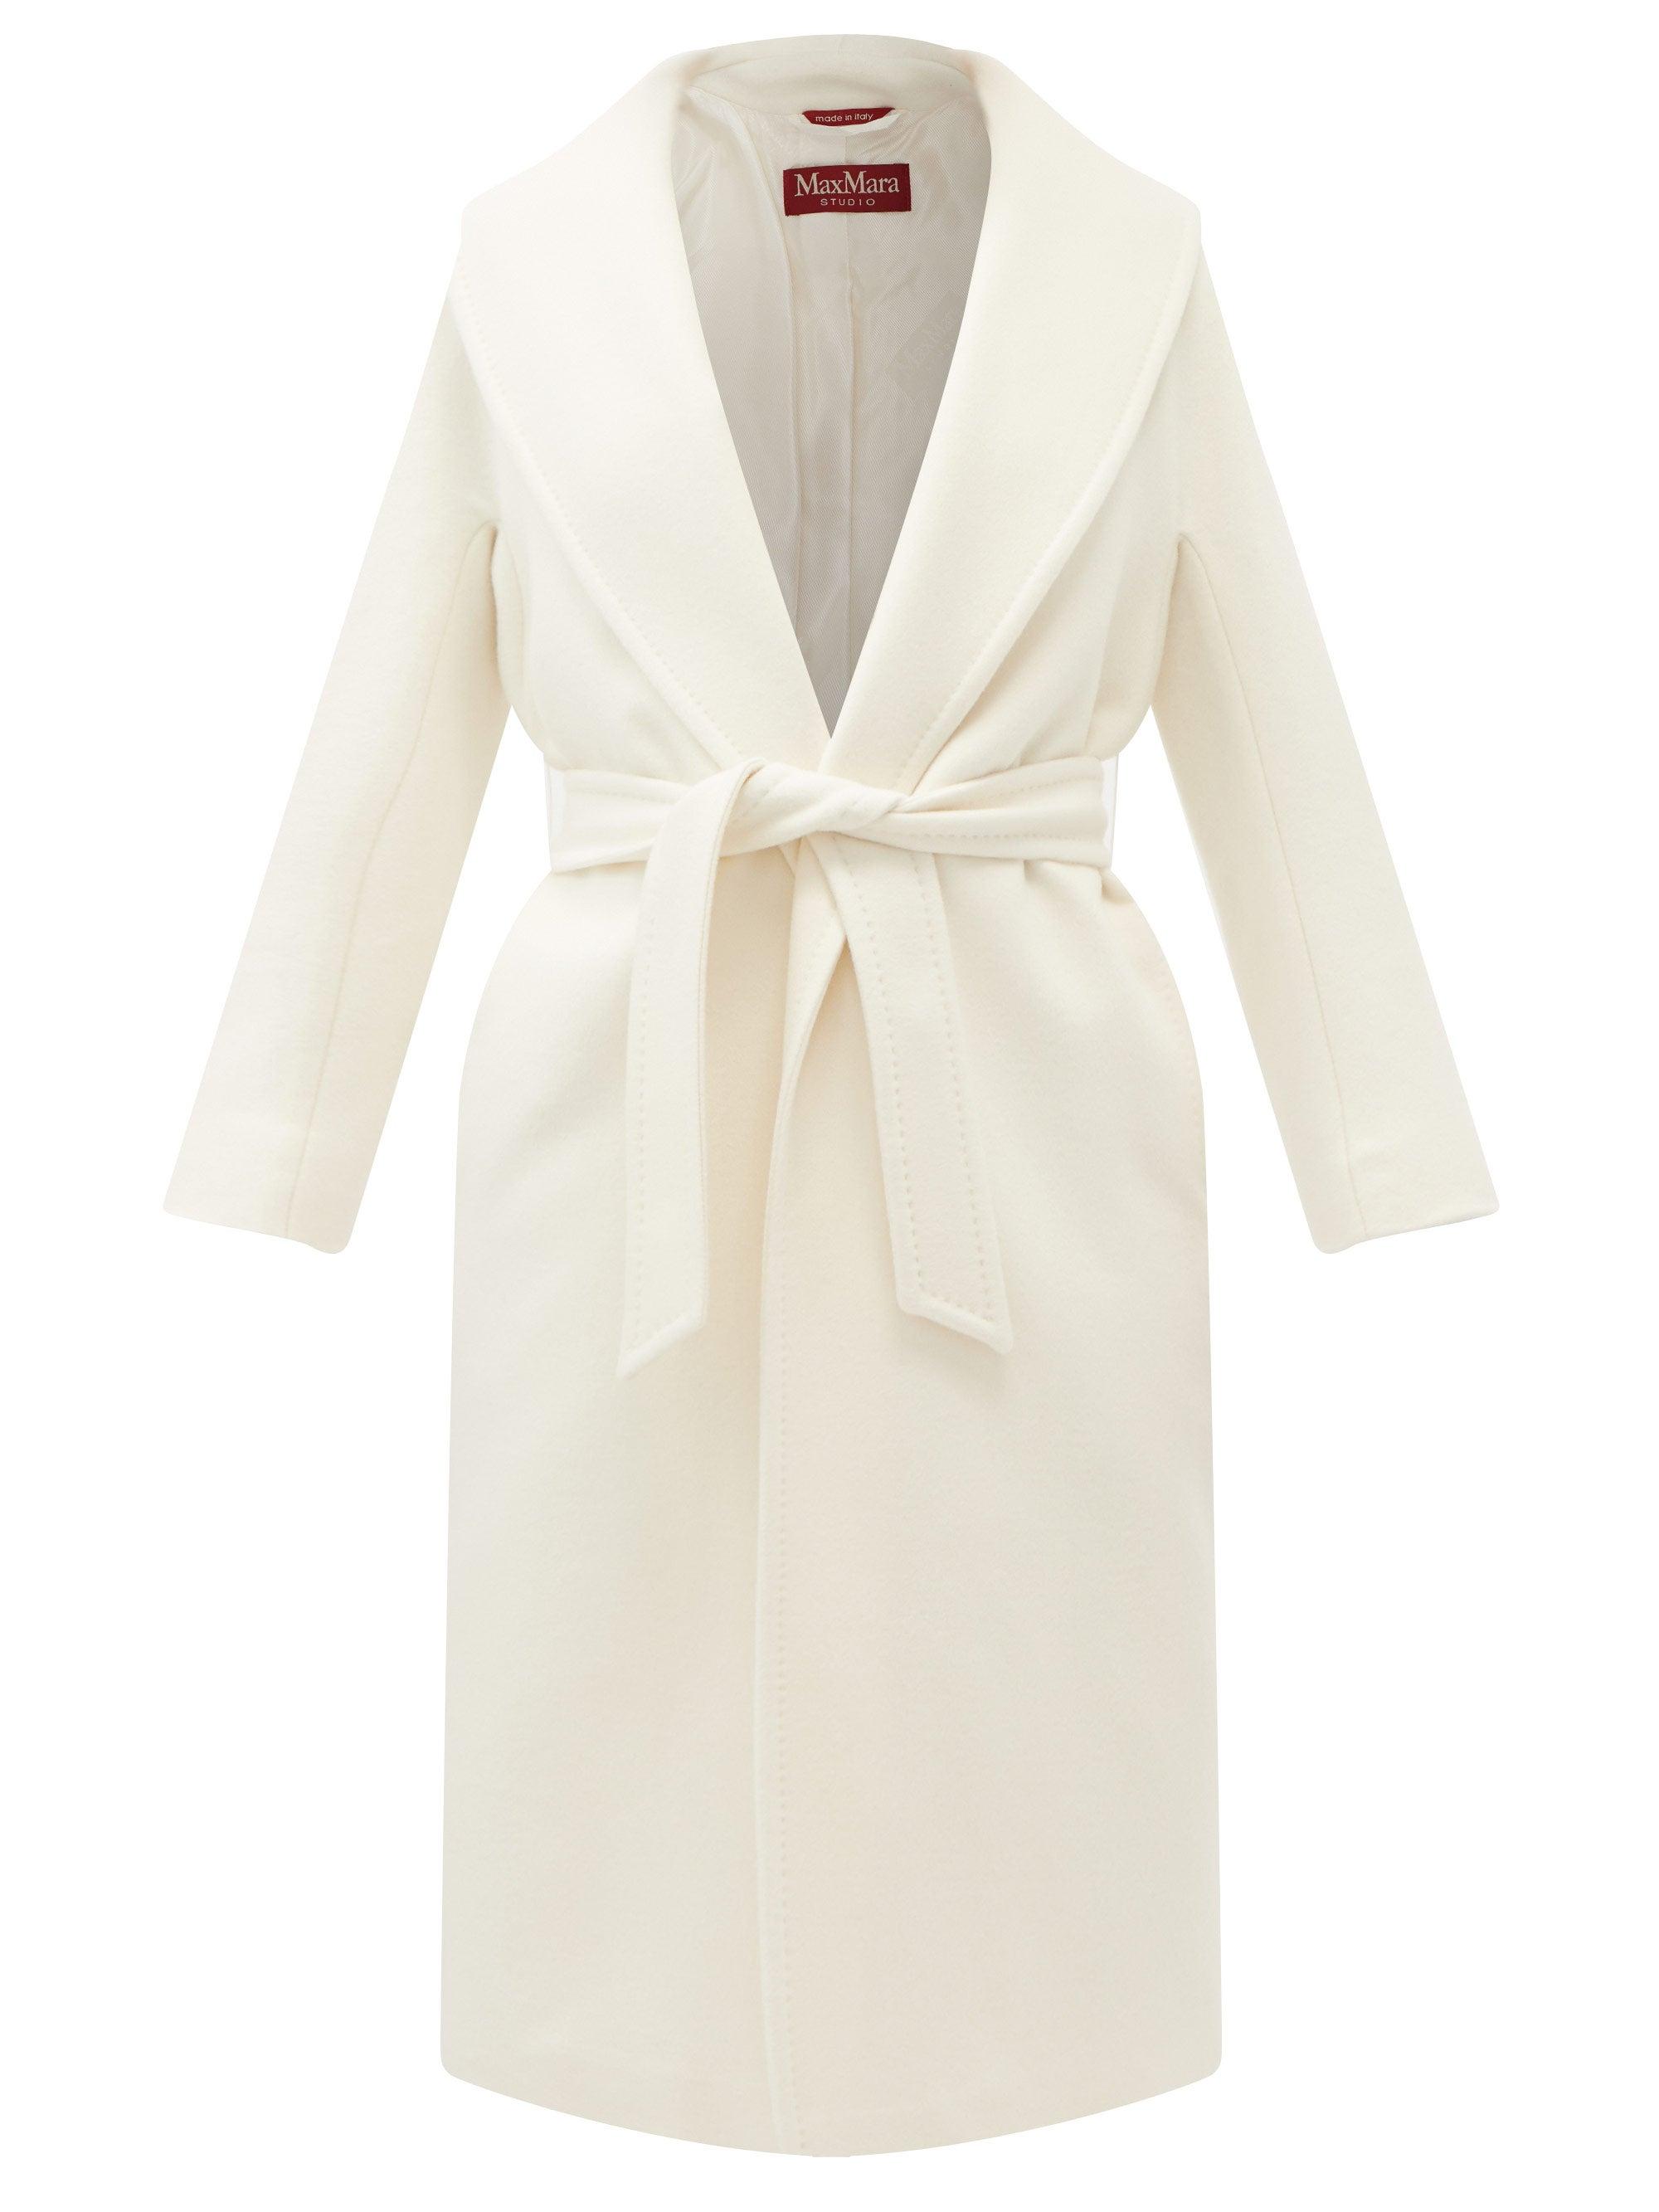 Max Mara Studio Palmeti Coat in White | Lyst